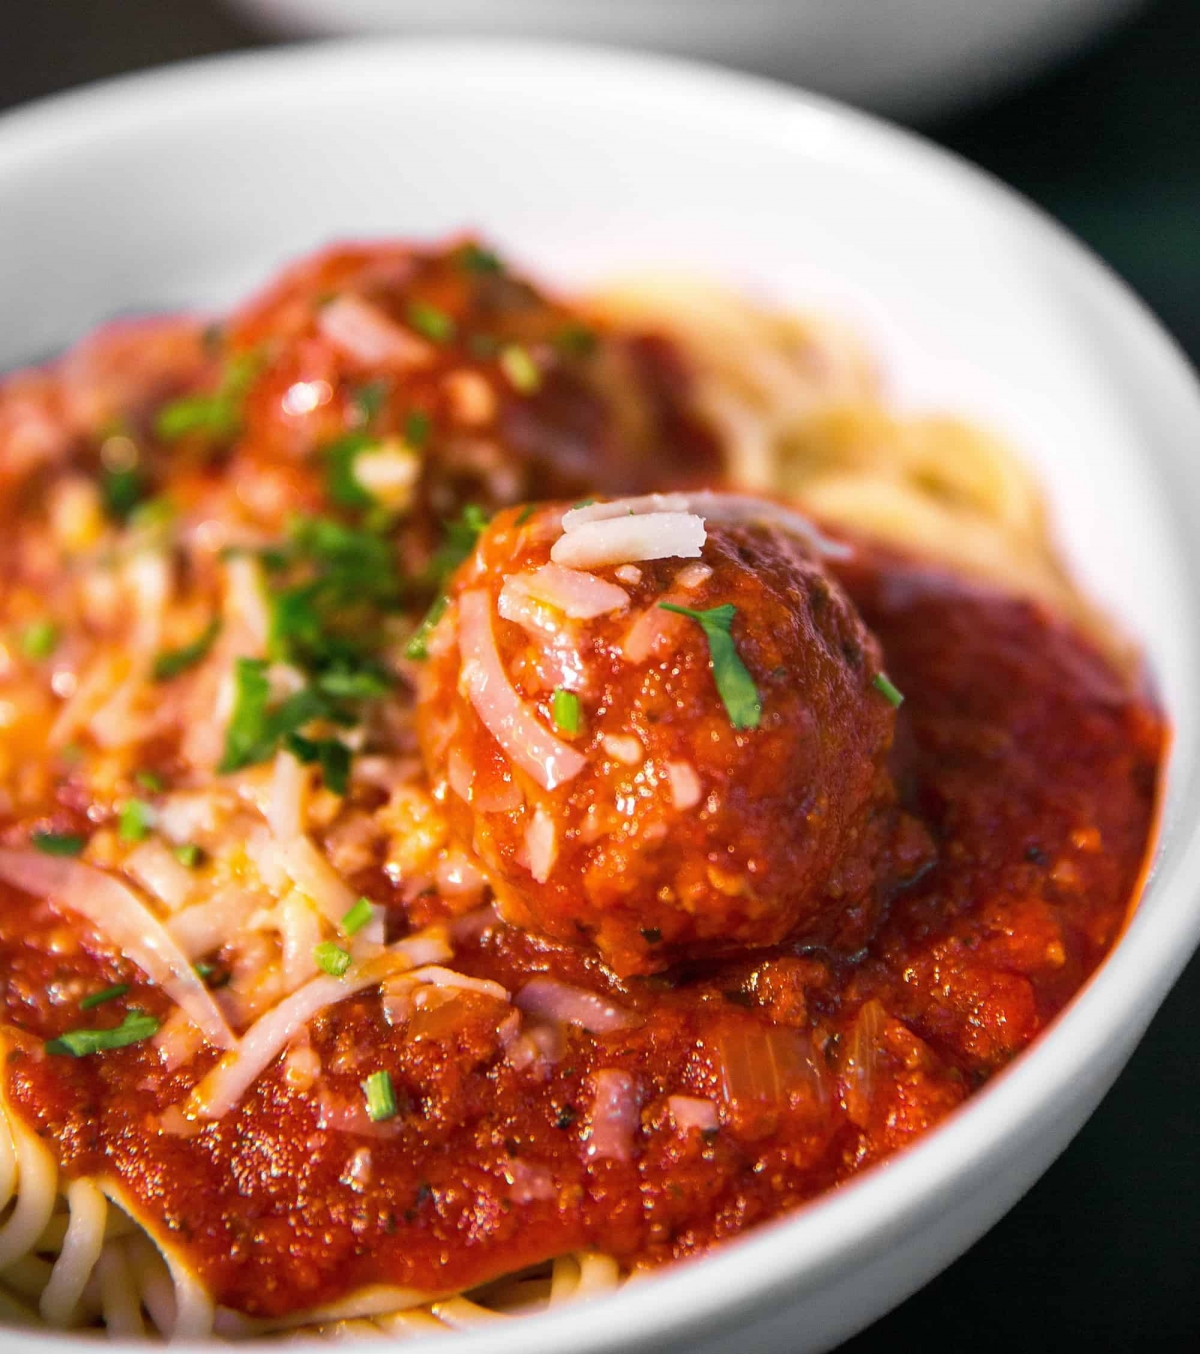 Spaghetti and Meatballs recipe Photo by Jason Leung on Unsplash